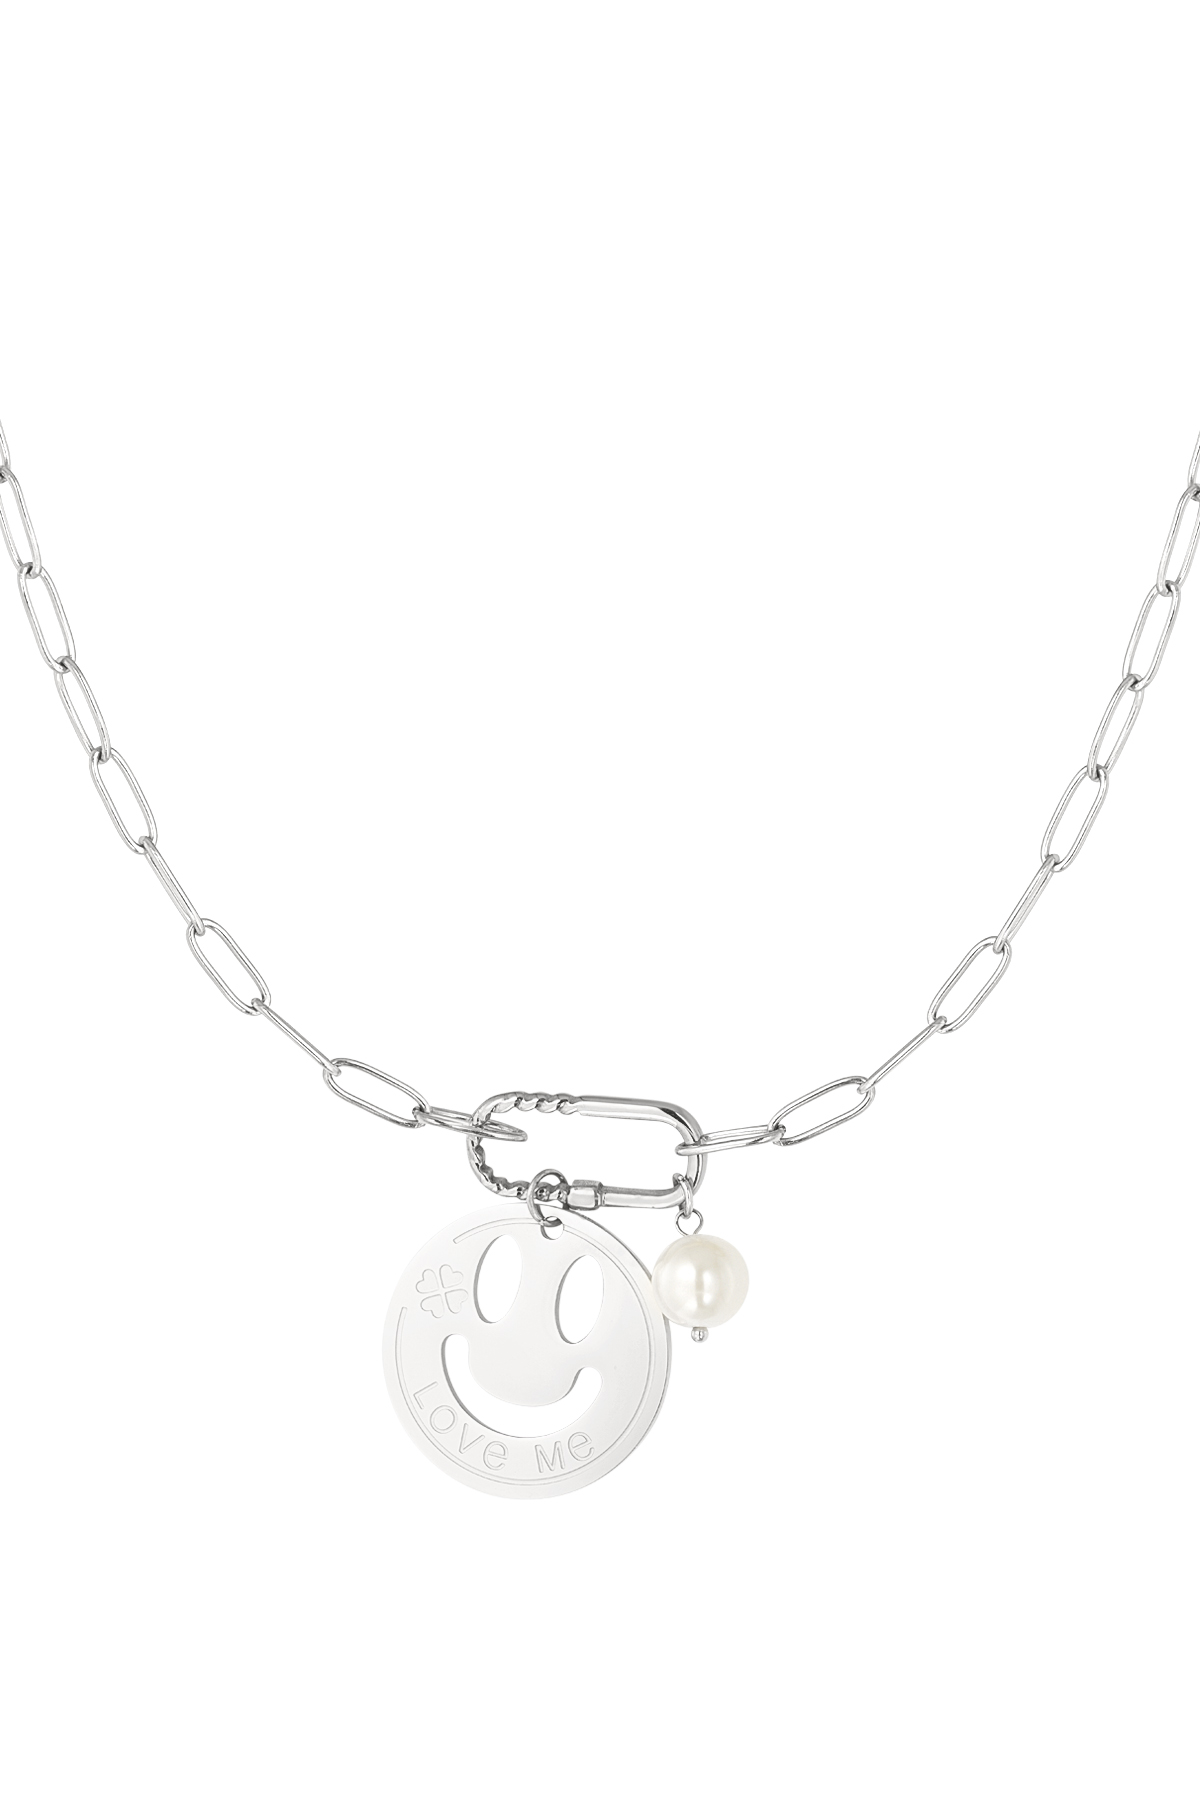 Smiley link necklace - silver 